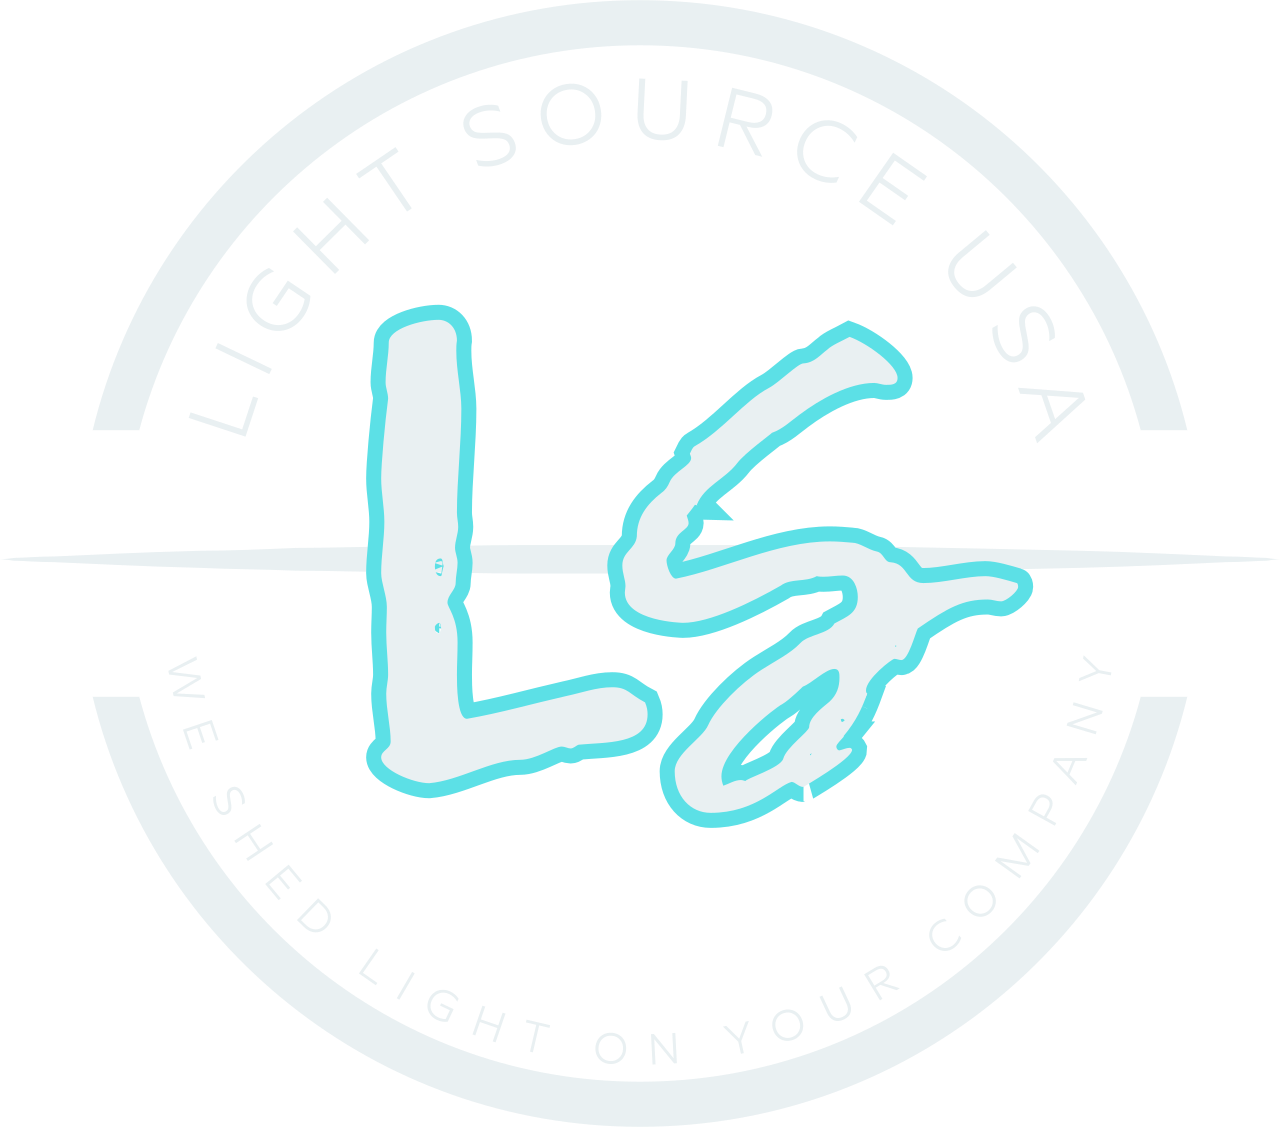 light source usa's web page